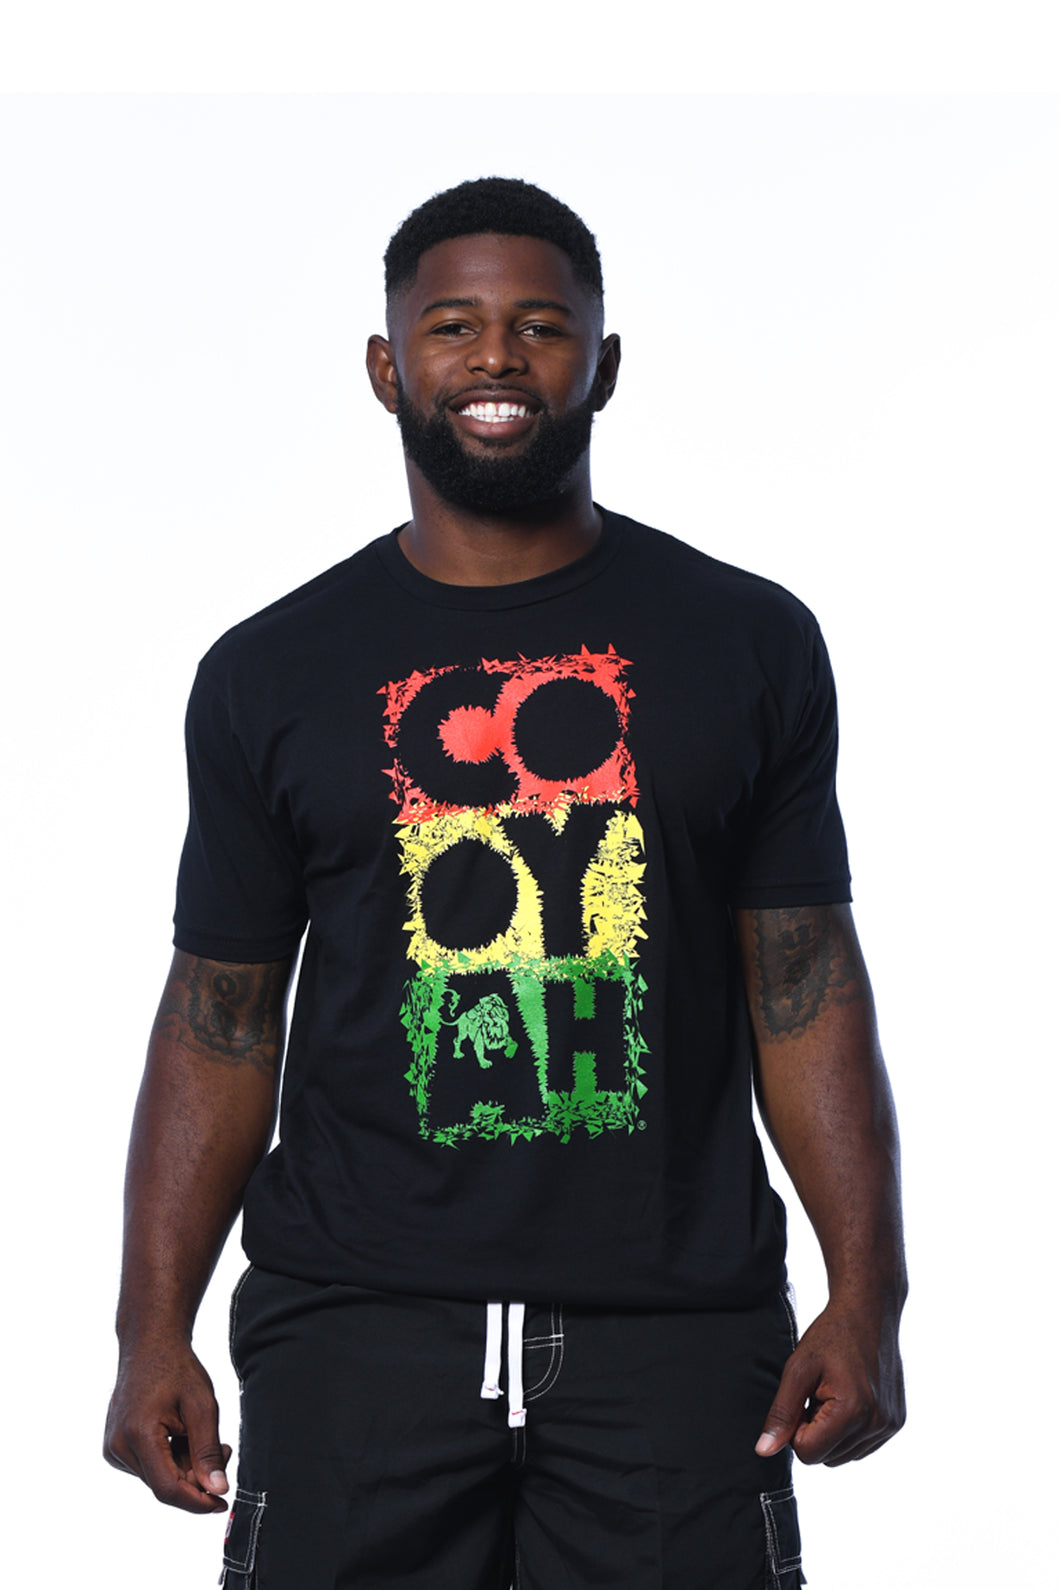 Cooyah Clothing short sleeve Men's Jamaica graphic Tee Shirt, Ring Spun, Crew Neck, Street Wear Reggae Style.  IRIE